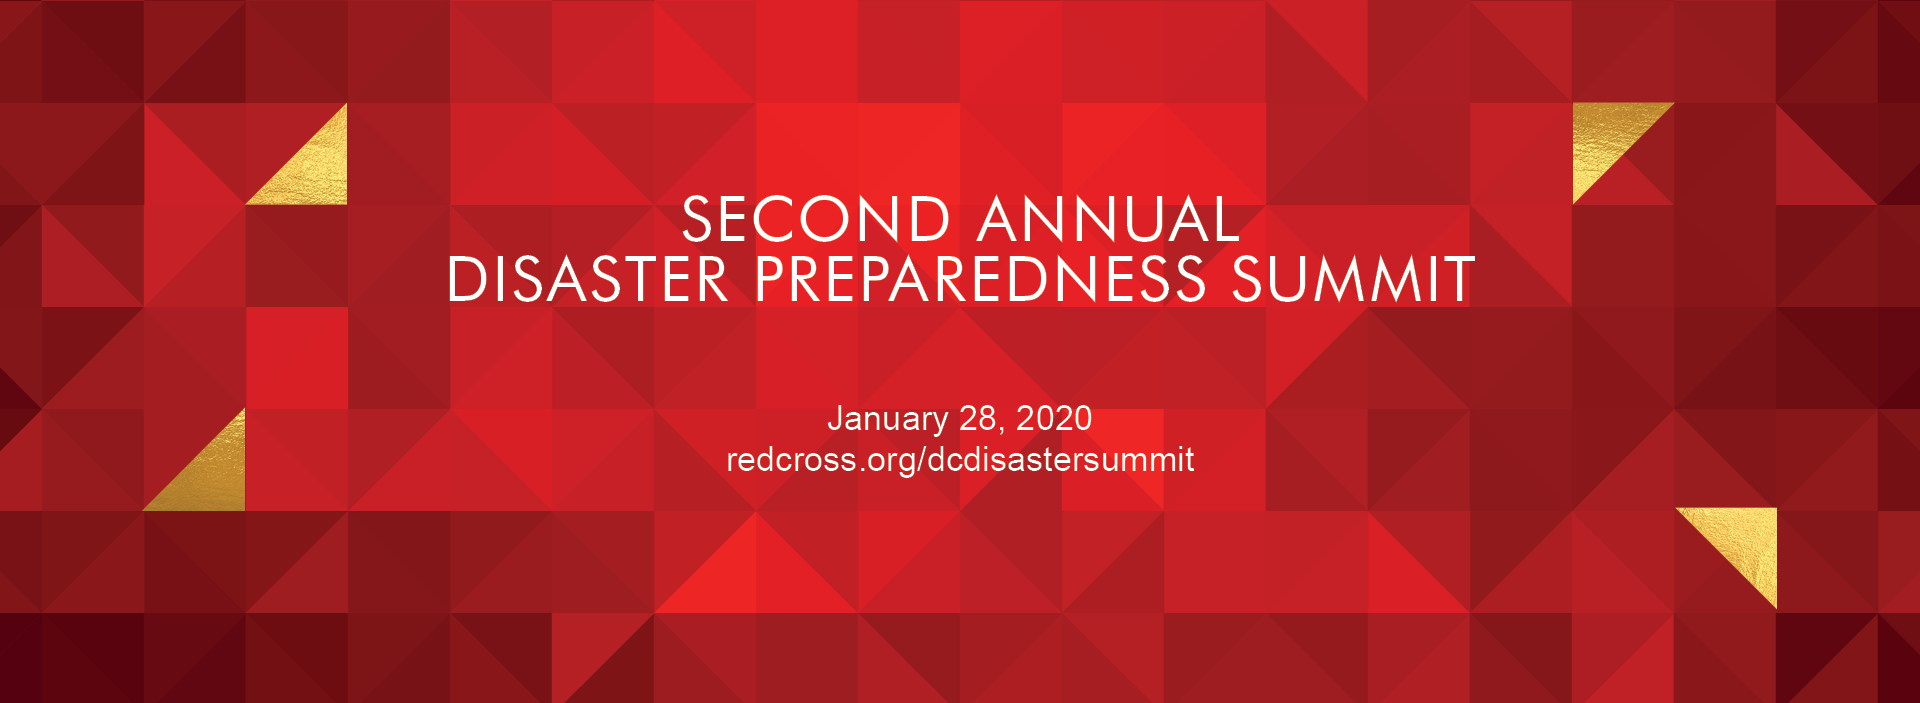 Second Annual Disaster Preparedness Summit